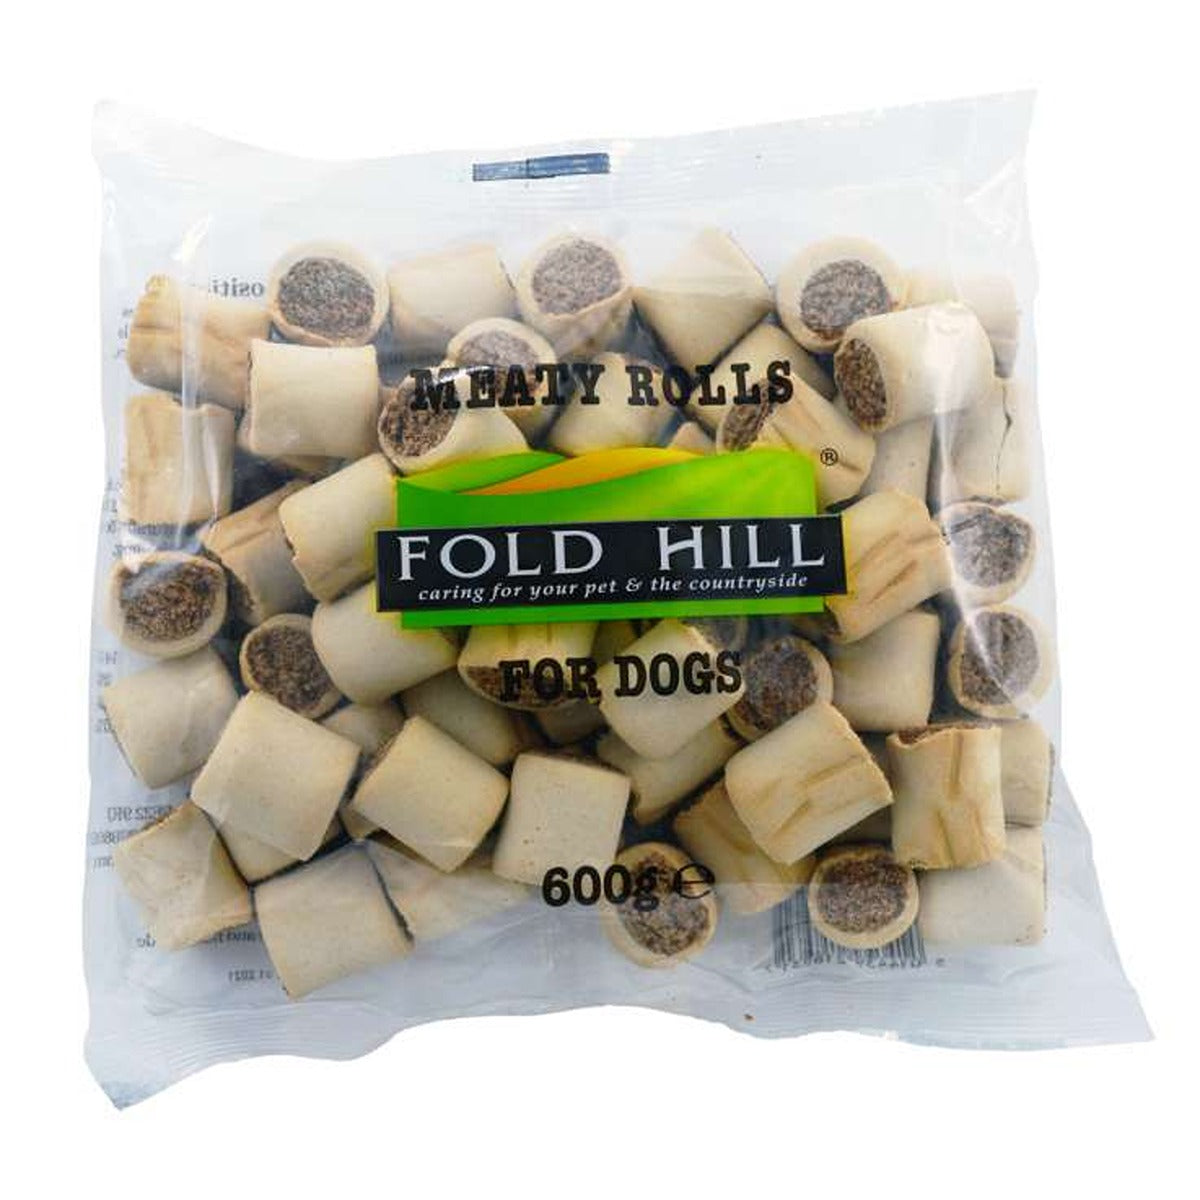 Fold Hill - Meaty Rolls Dog Treats - 600g - Continental Food Store